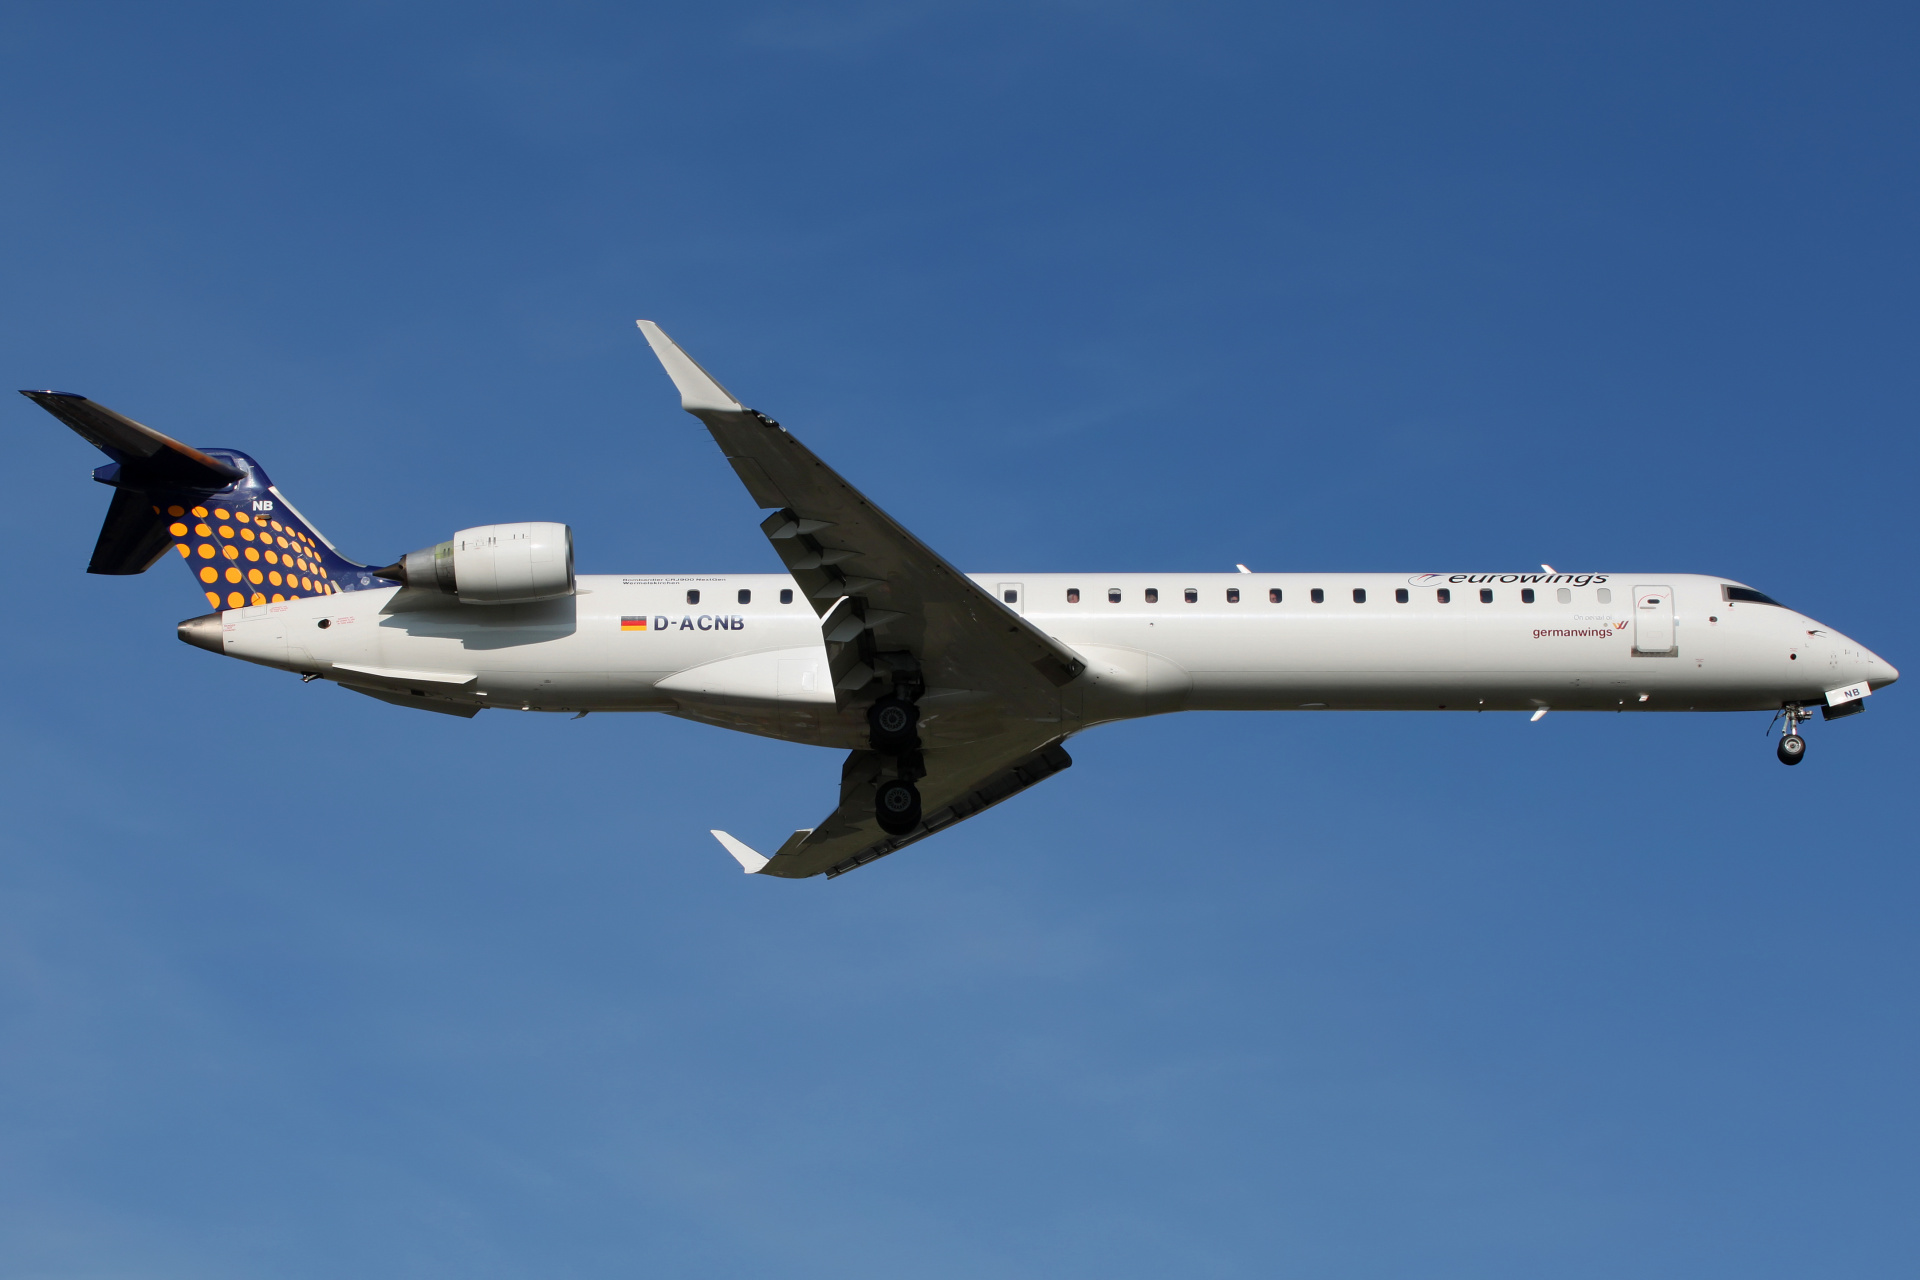 D-ACNB, Eurowings (Germanwings) (Aircraft » EPWA Spotting » Mitsubishi Regional Jet » CRJ-900 » Eurowings)